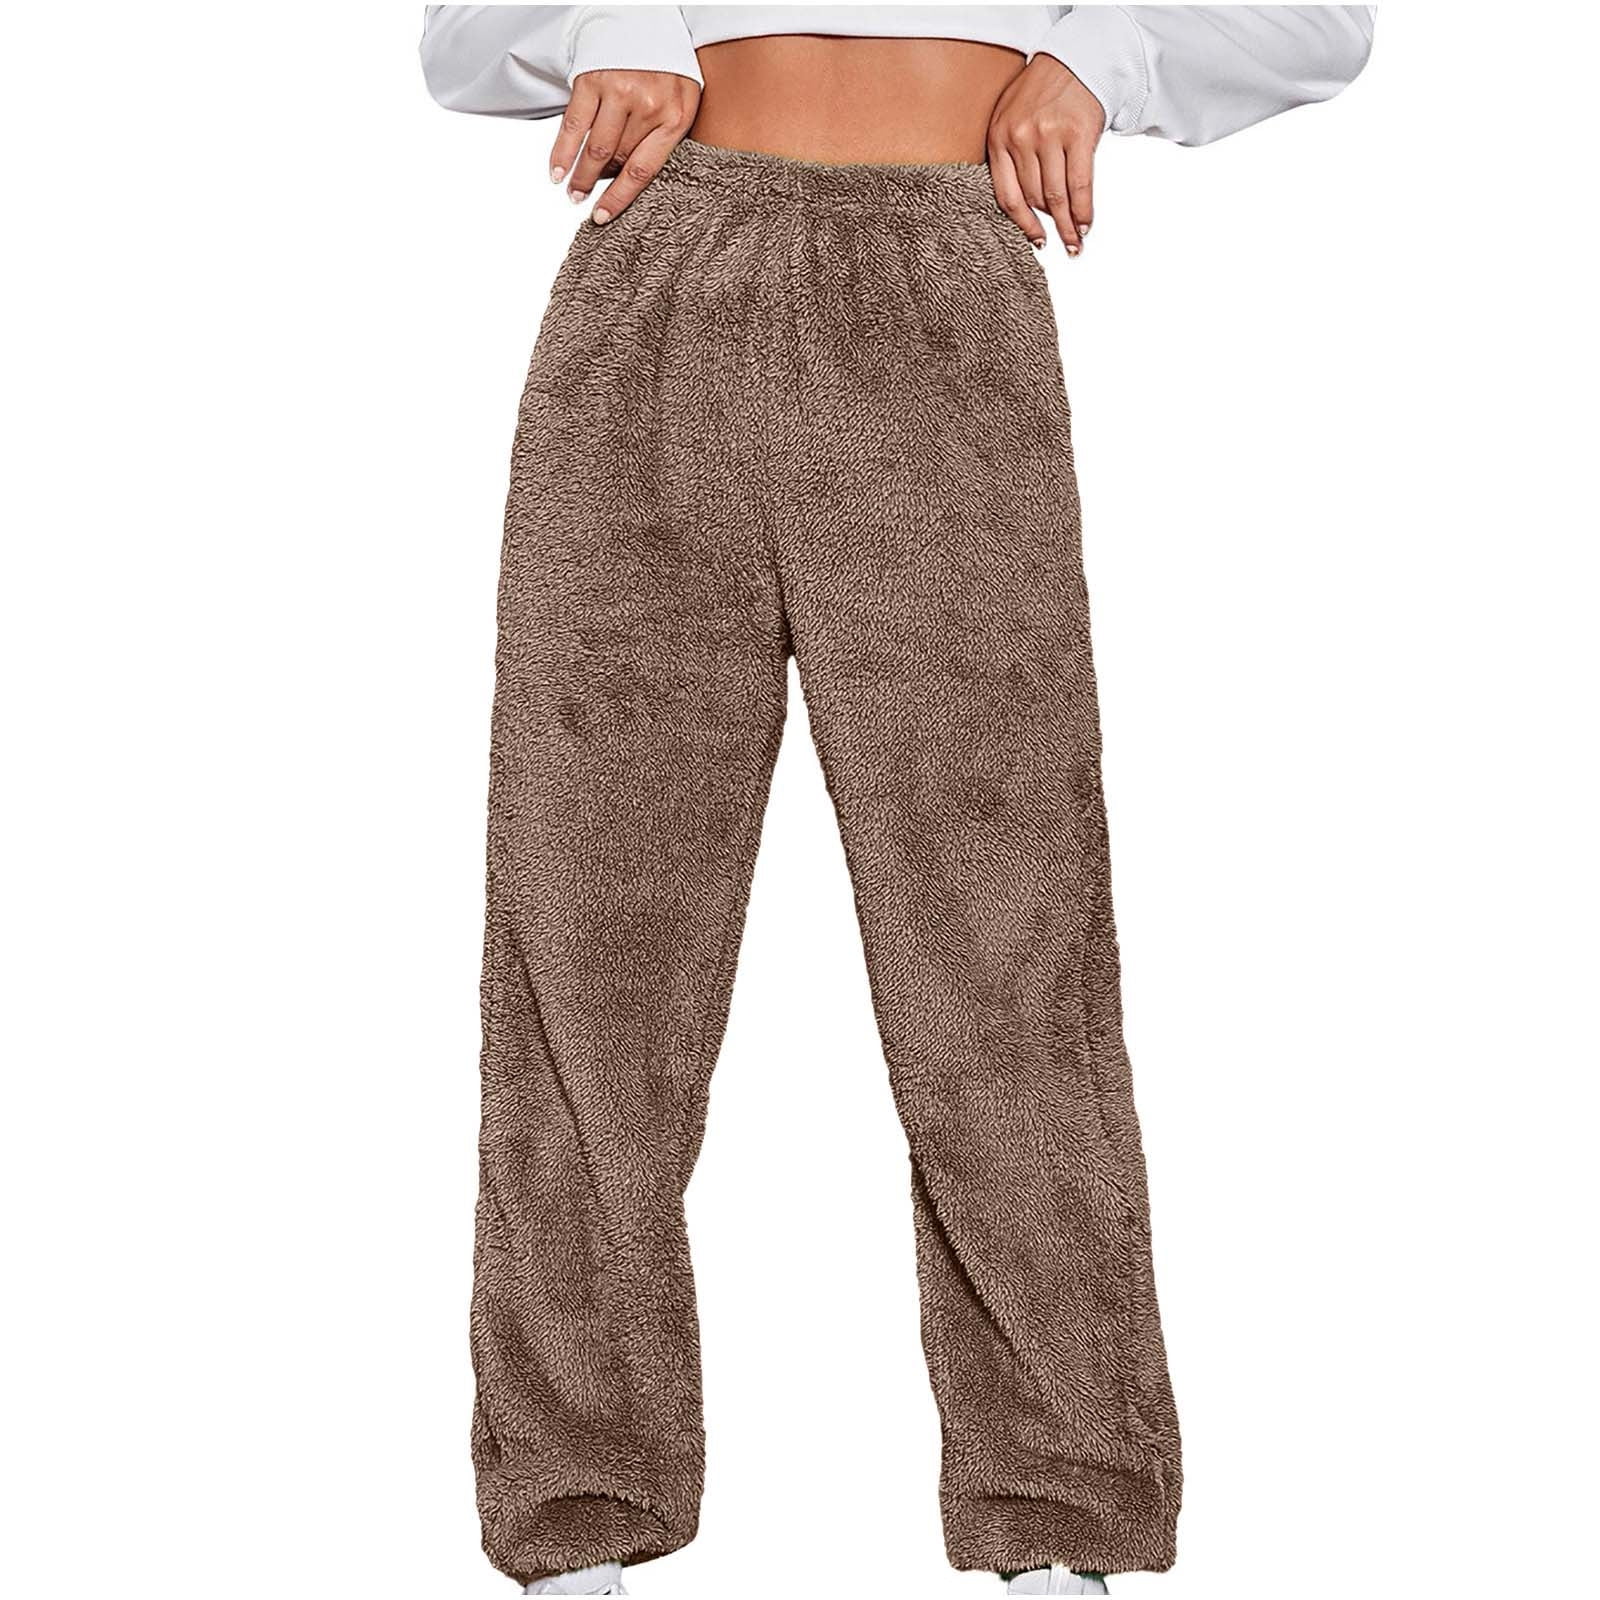 Springrain Womens Fuzzy Pajama Pants Fluffy Lounge Pants Warm Fleece Pj  Pants with Pockets